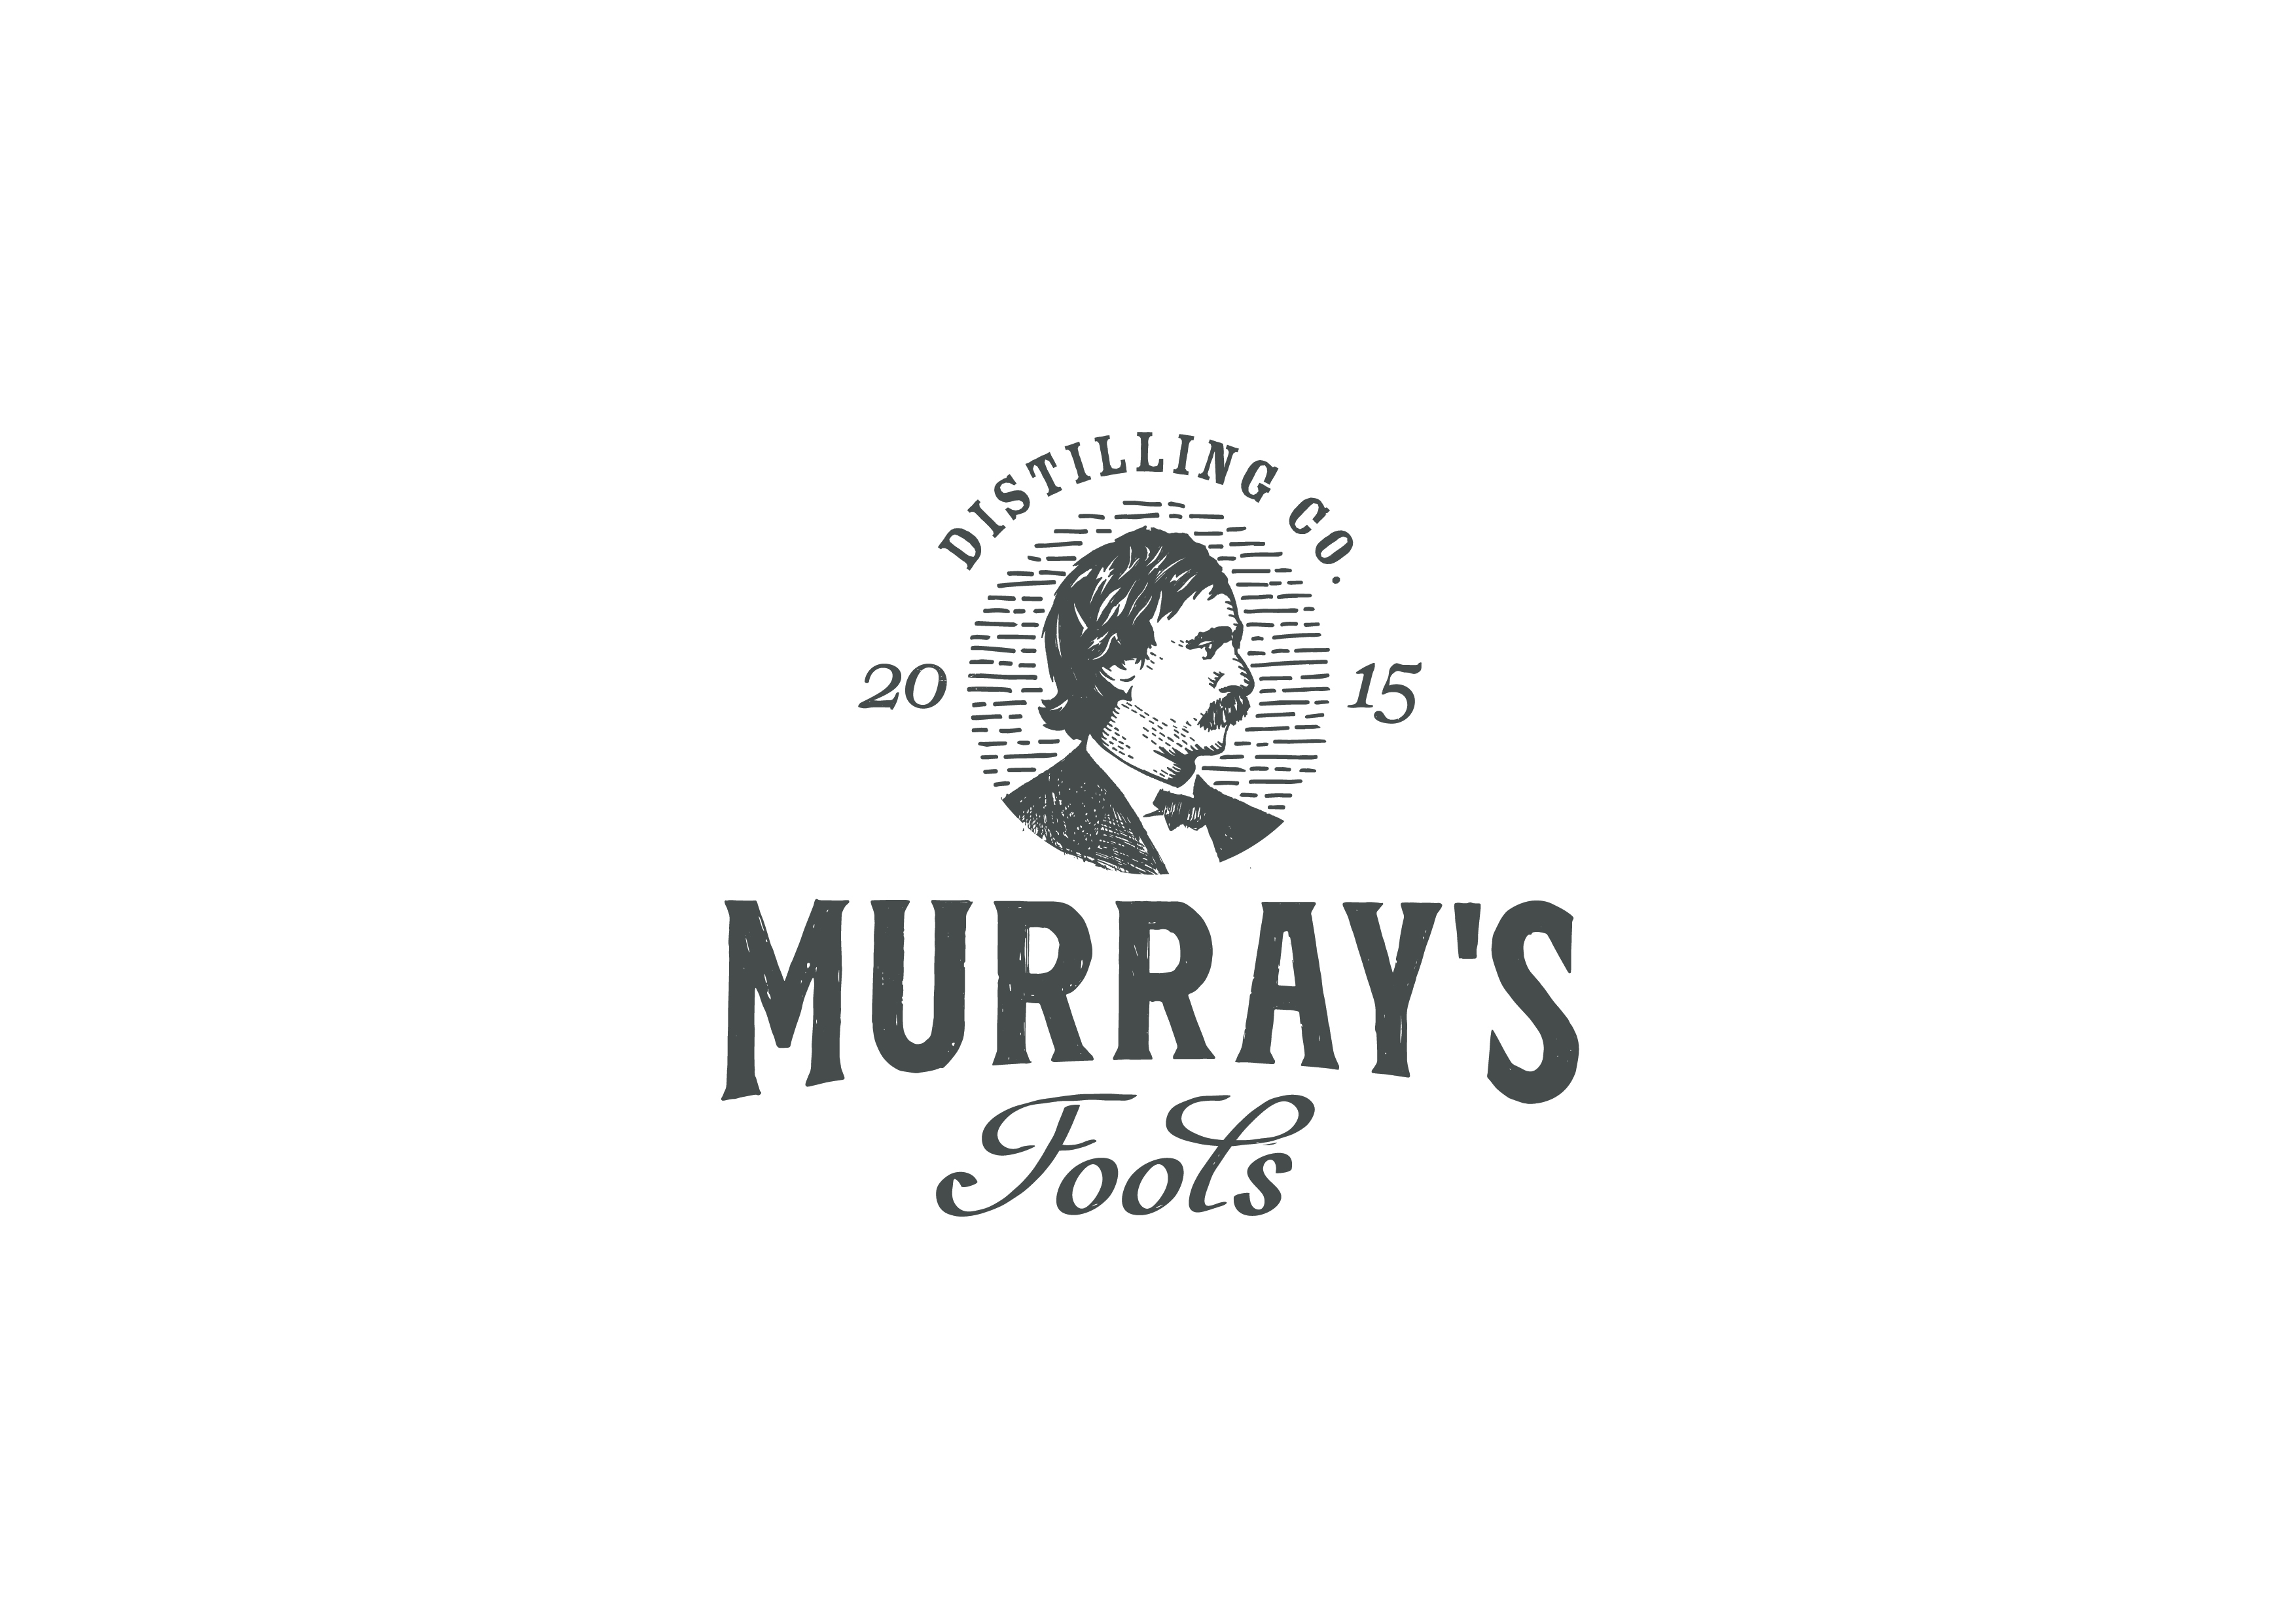 Murray's Fools Distilling Co.